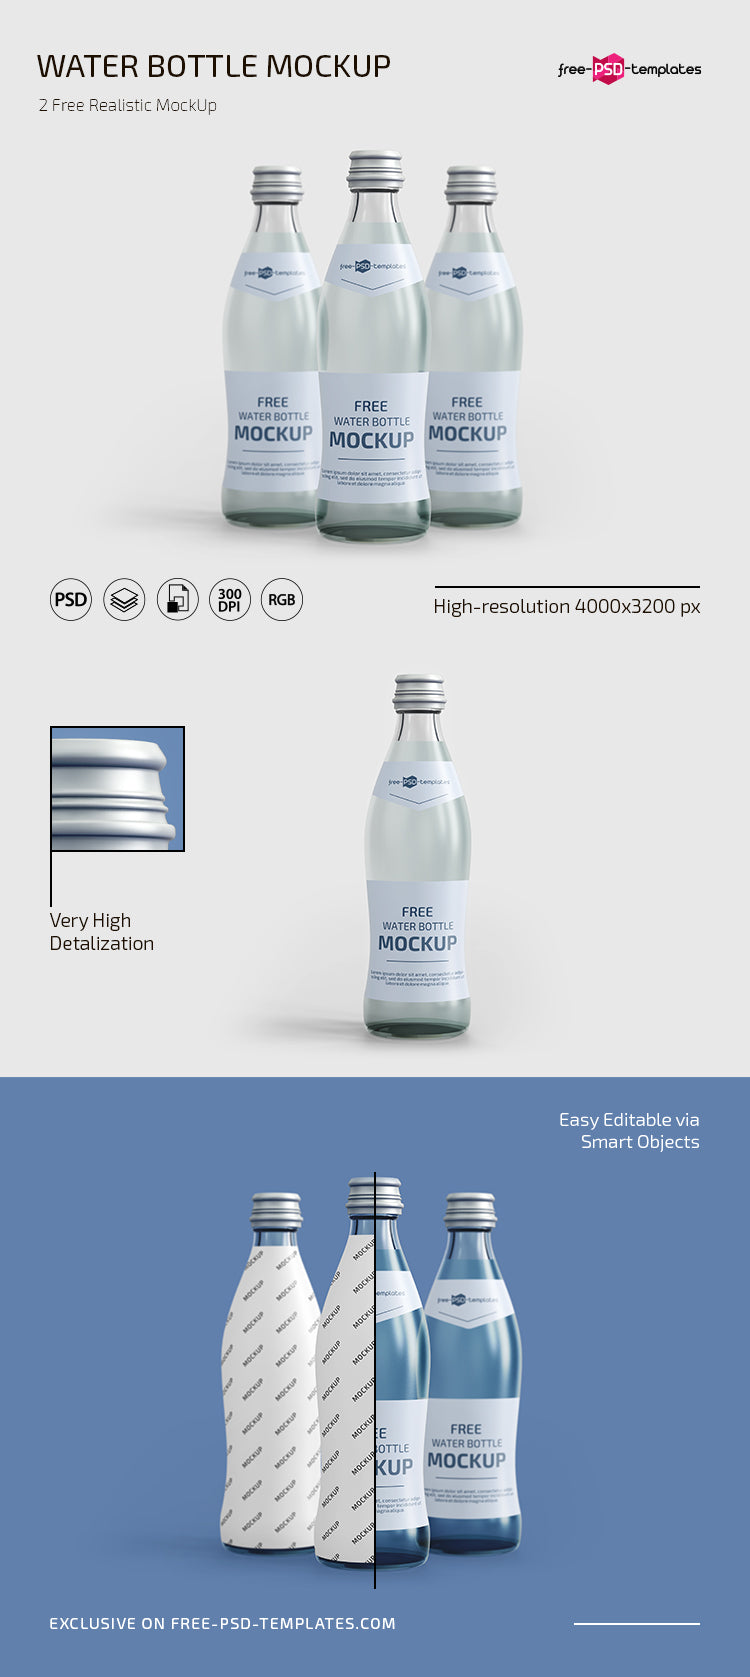 Free Psd Water Bottle Mockup Templates